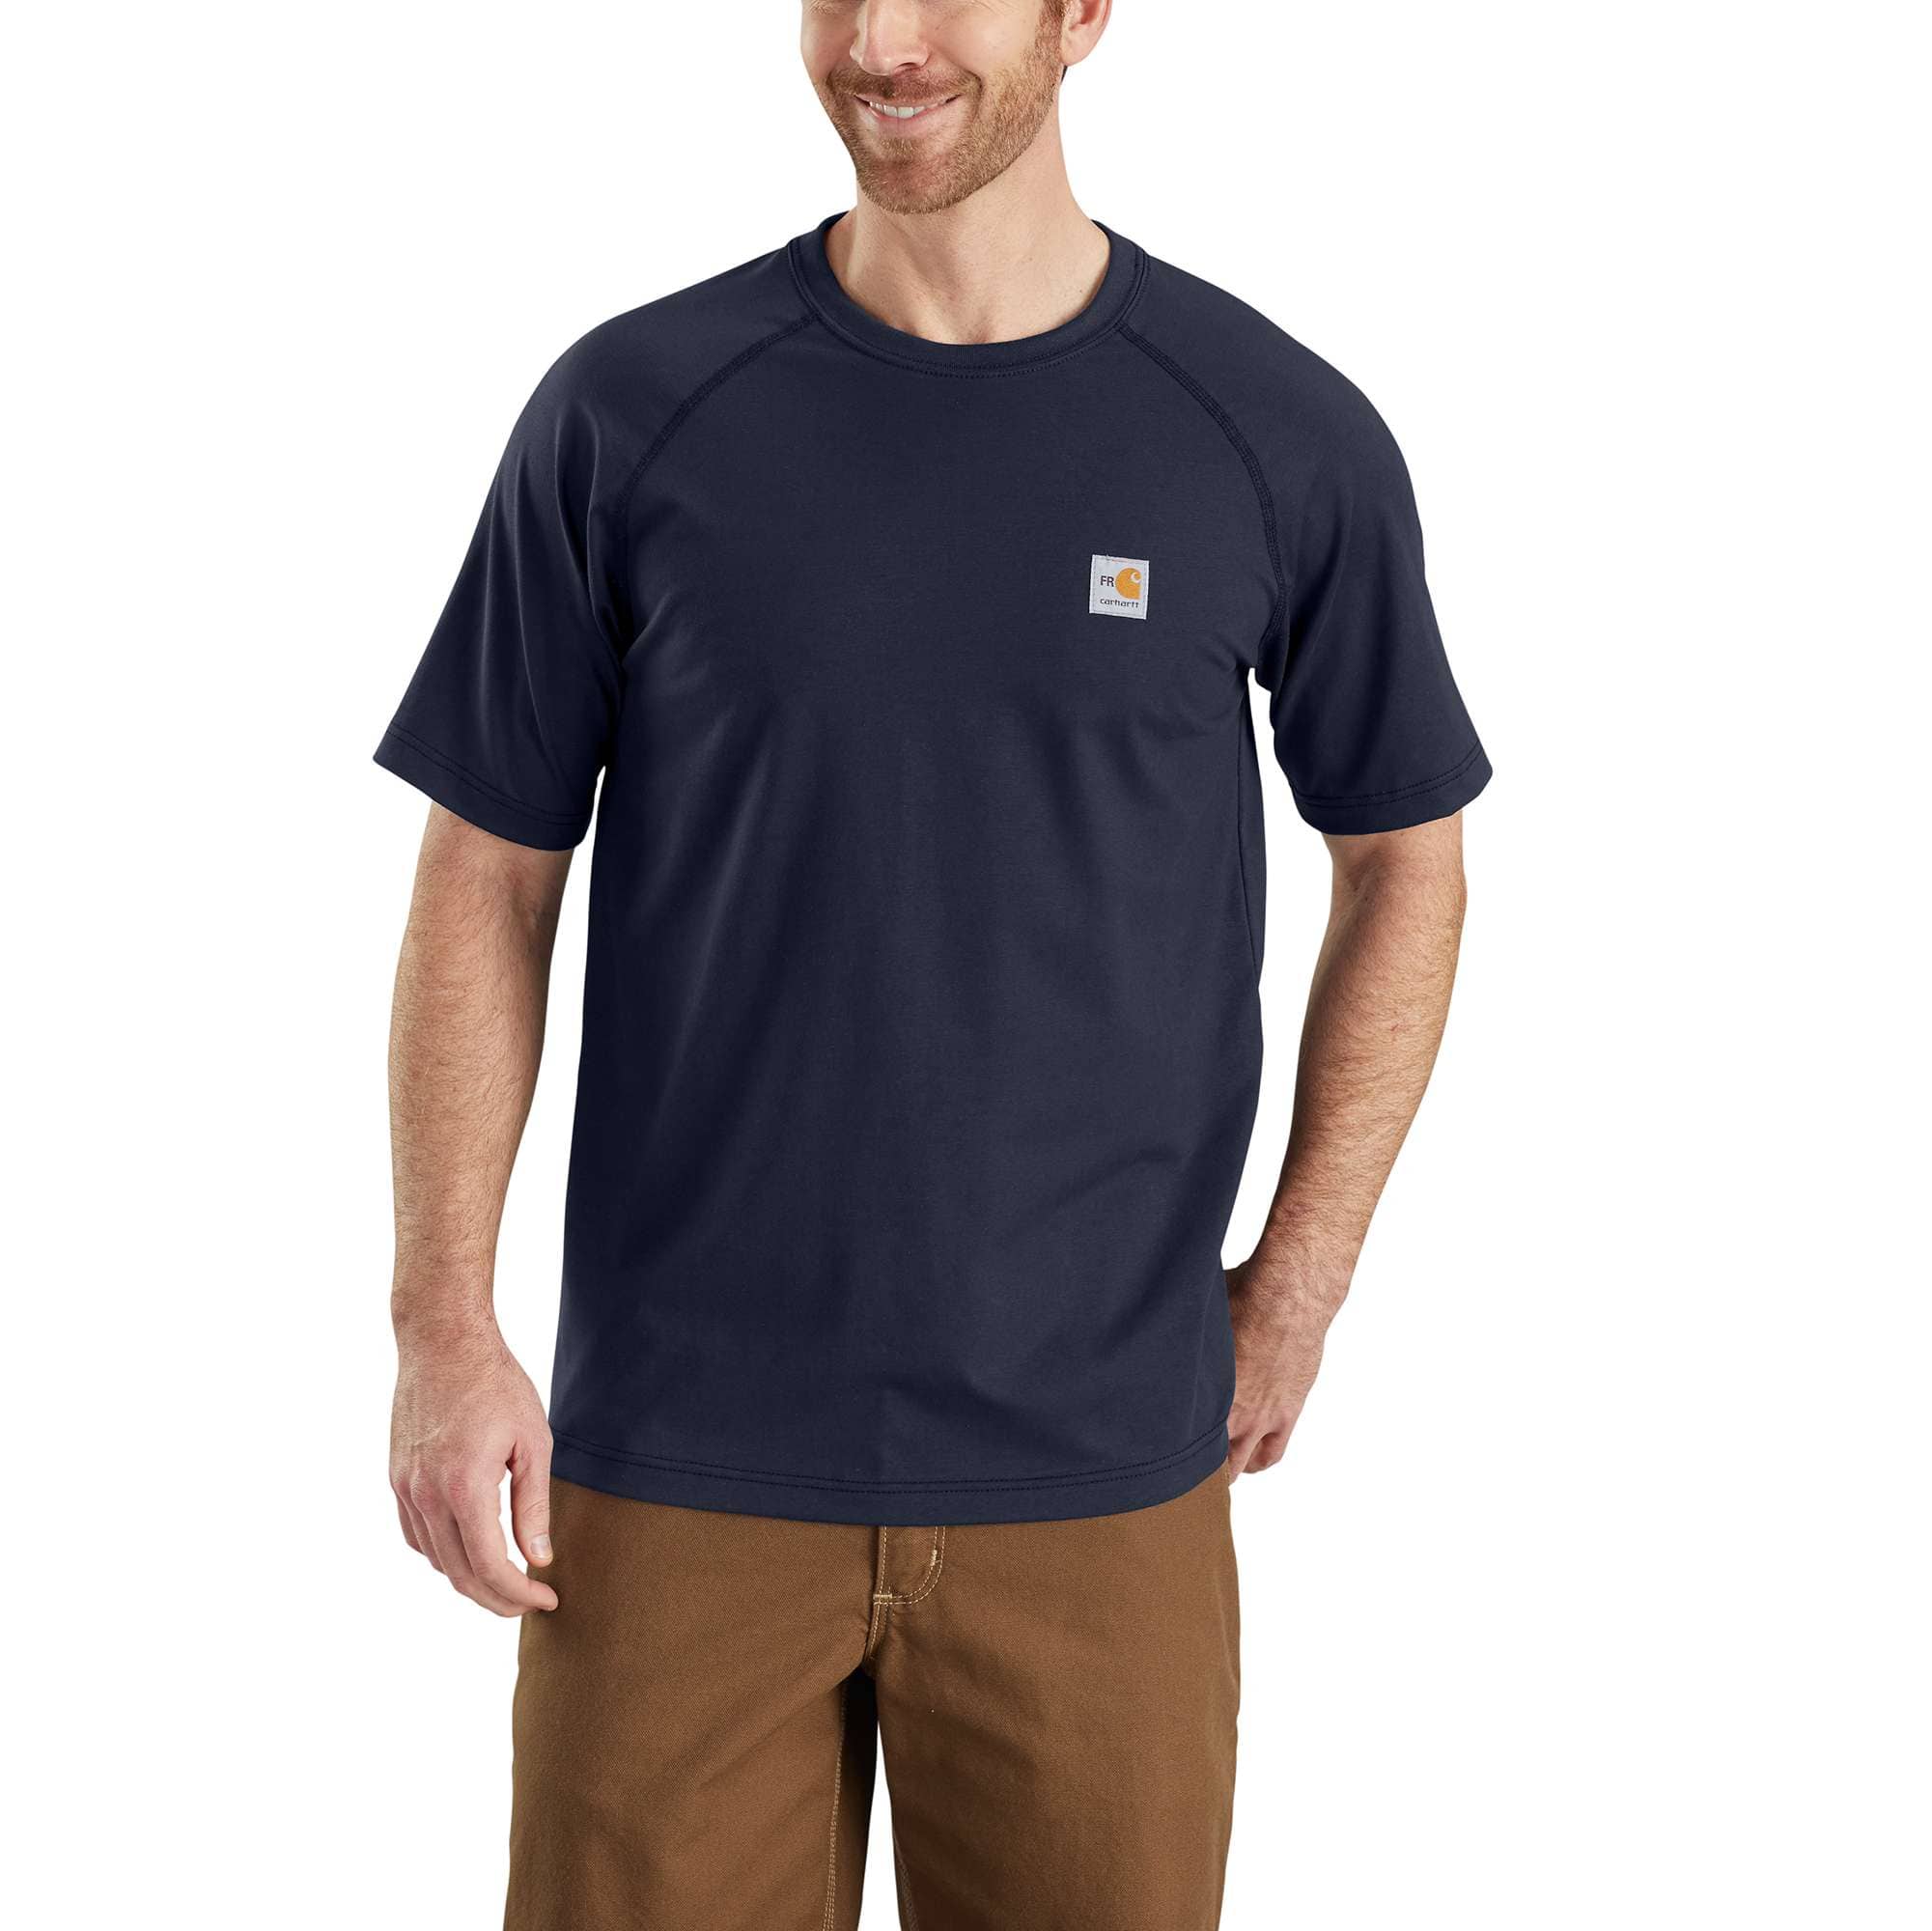 Men\'s Uniform T-shirts & Company Men | Carhartt for Tees Gear Company